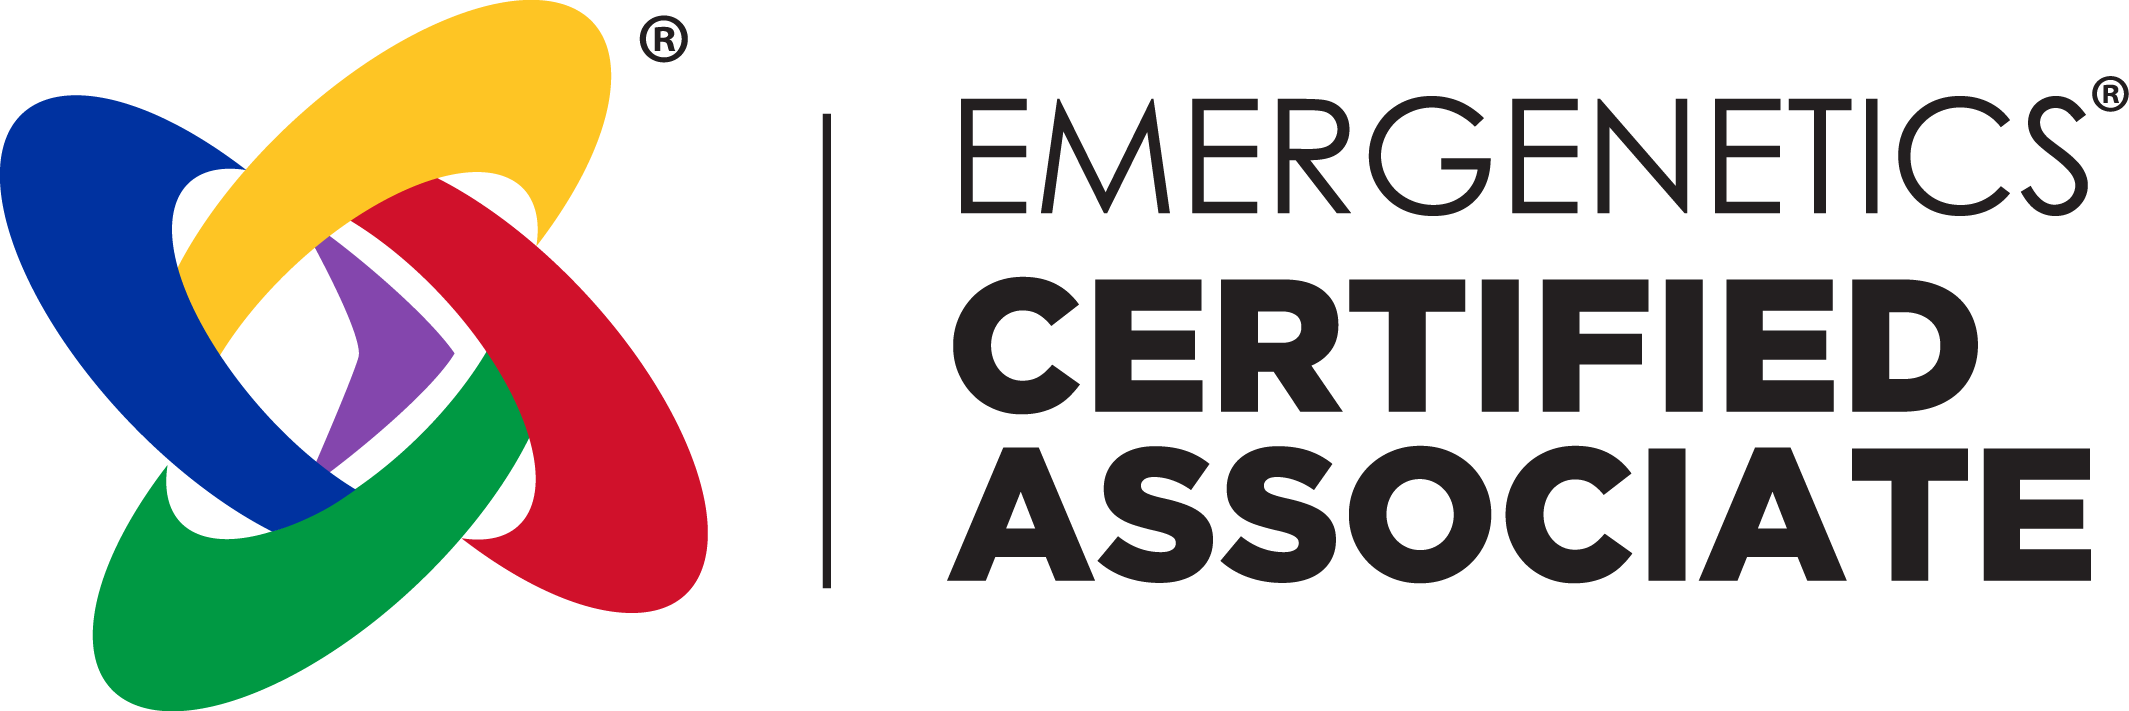 Emergentics_Certified_Associate